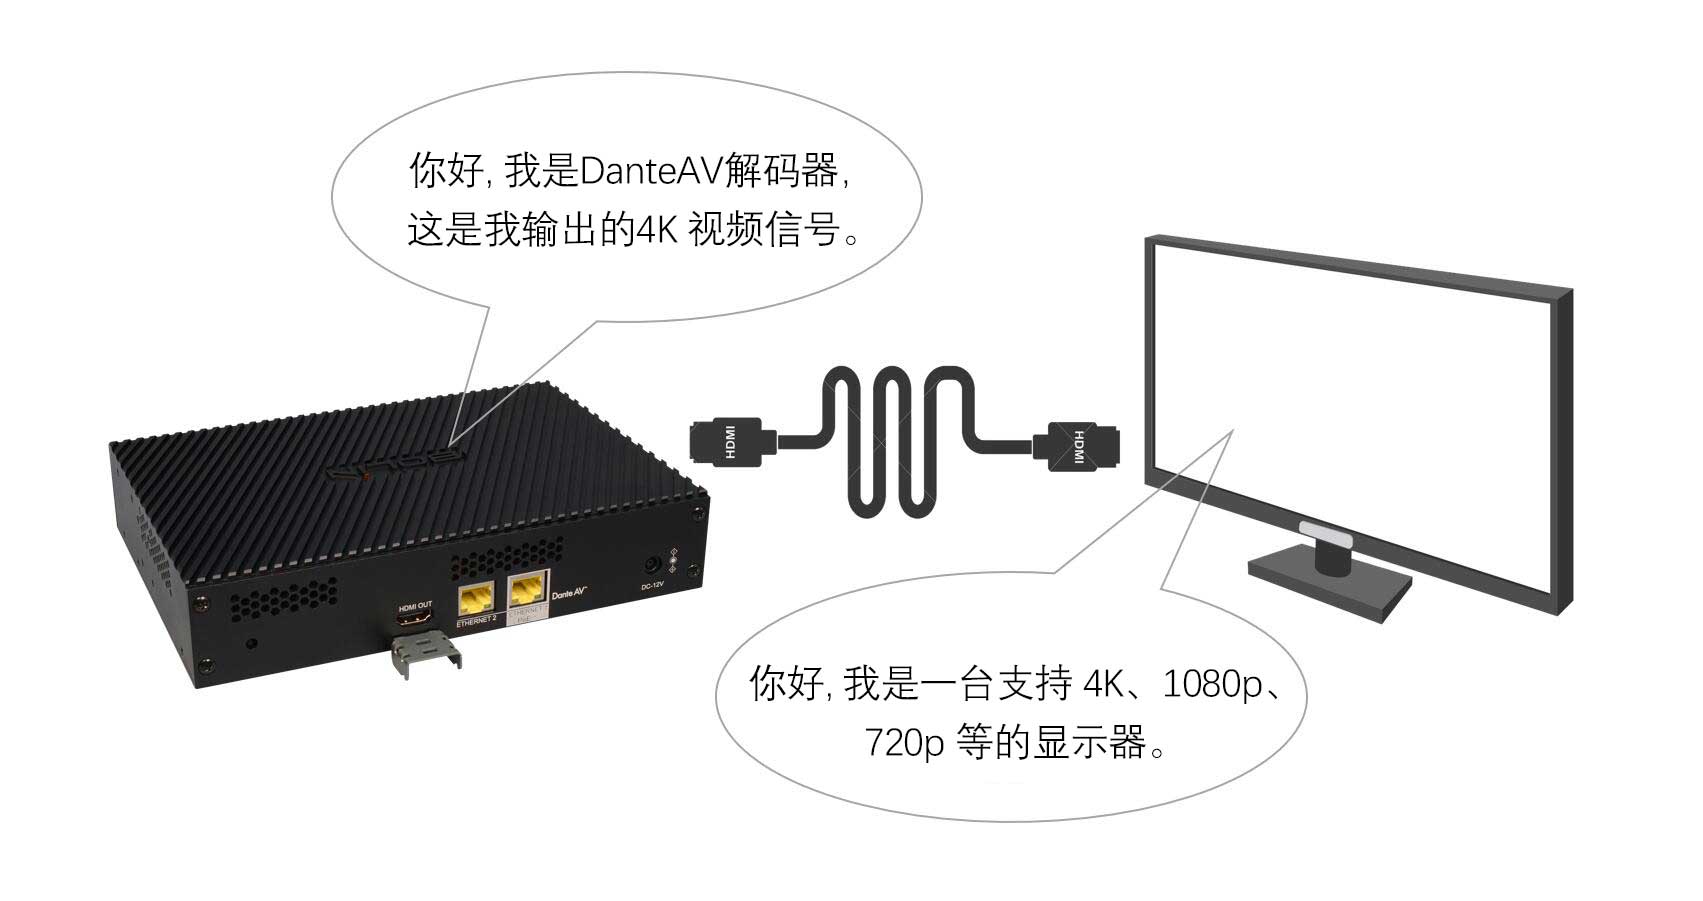 DanteAV-Decoder-HDMI-EDID-2